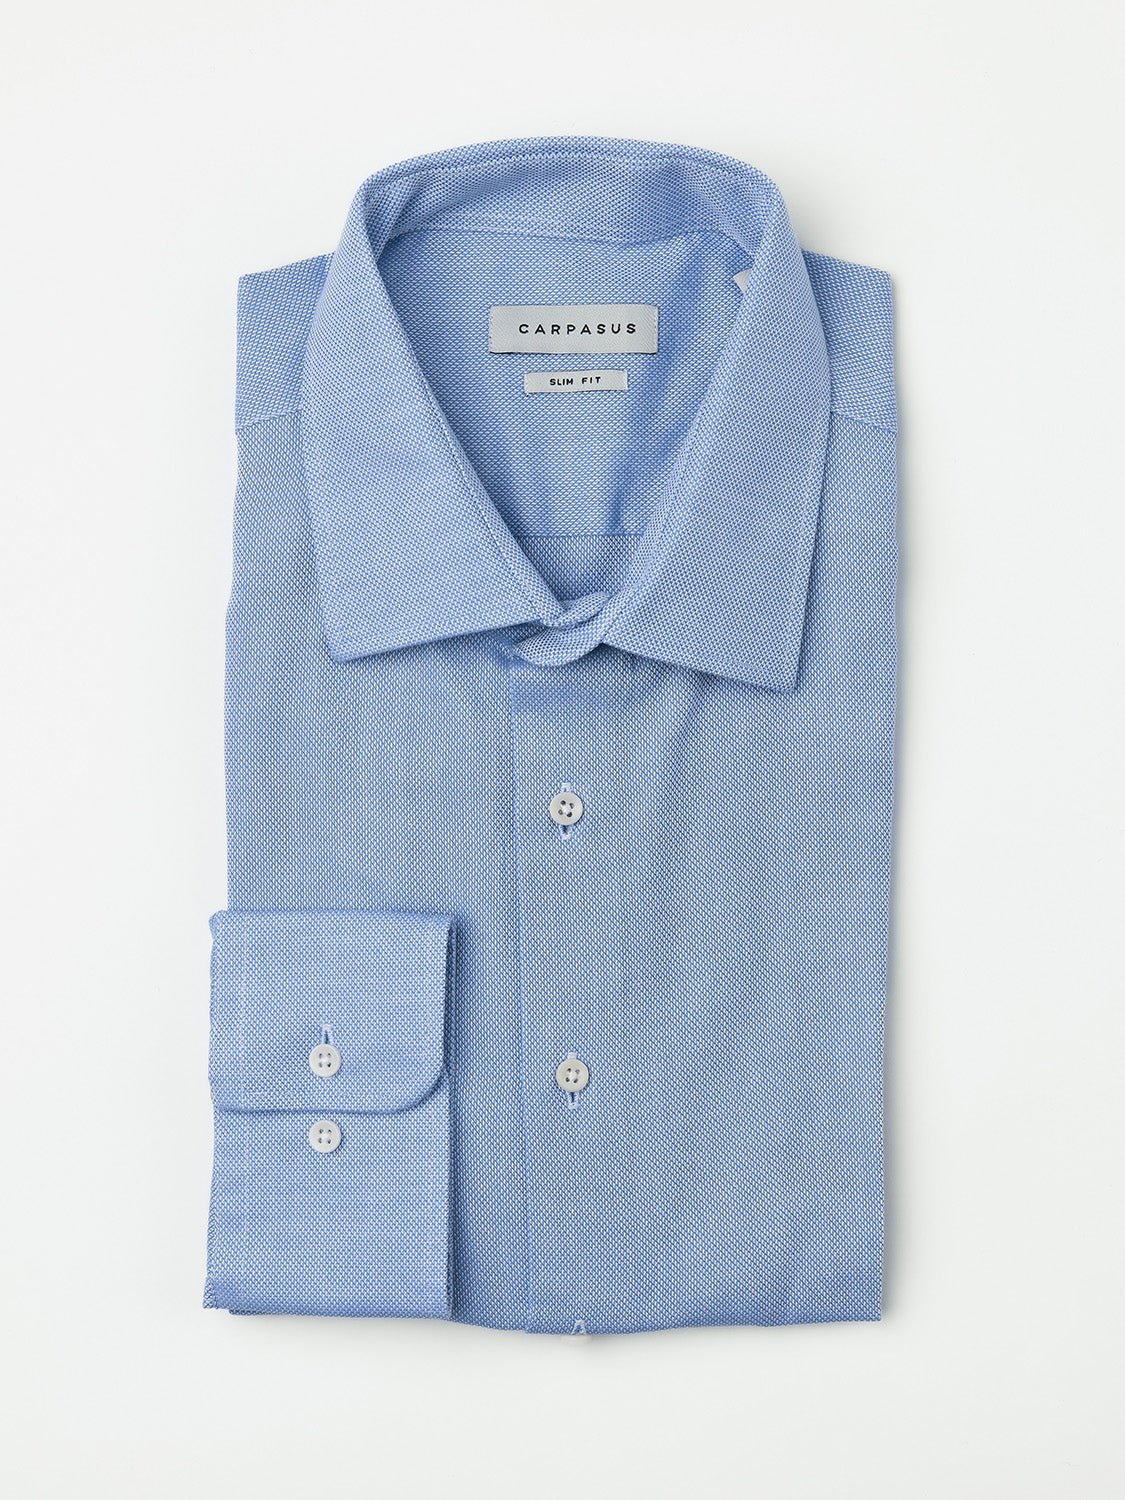 carpasus sustainable organic cotton shirt porto blue. Nachhaltiges Carpasus Hemd aus Bio Baumwolle Porto Blau